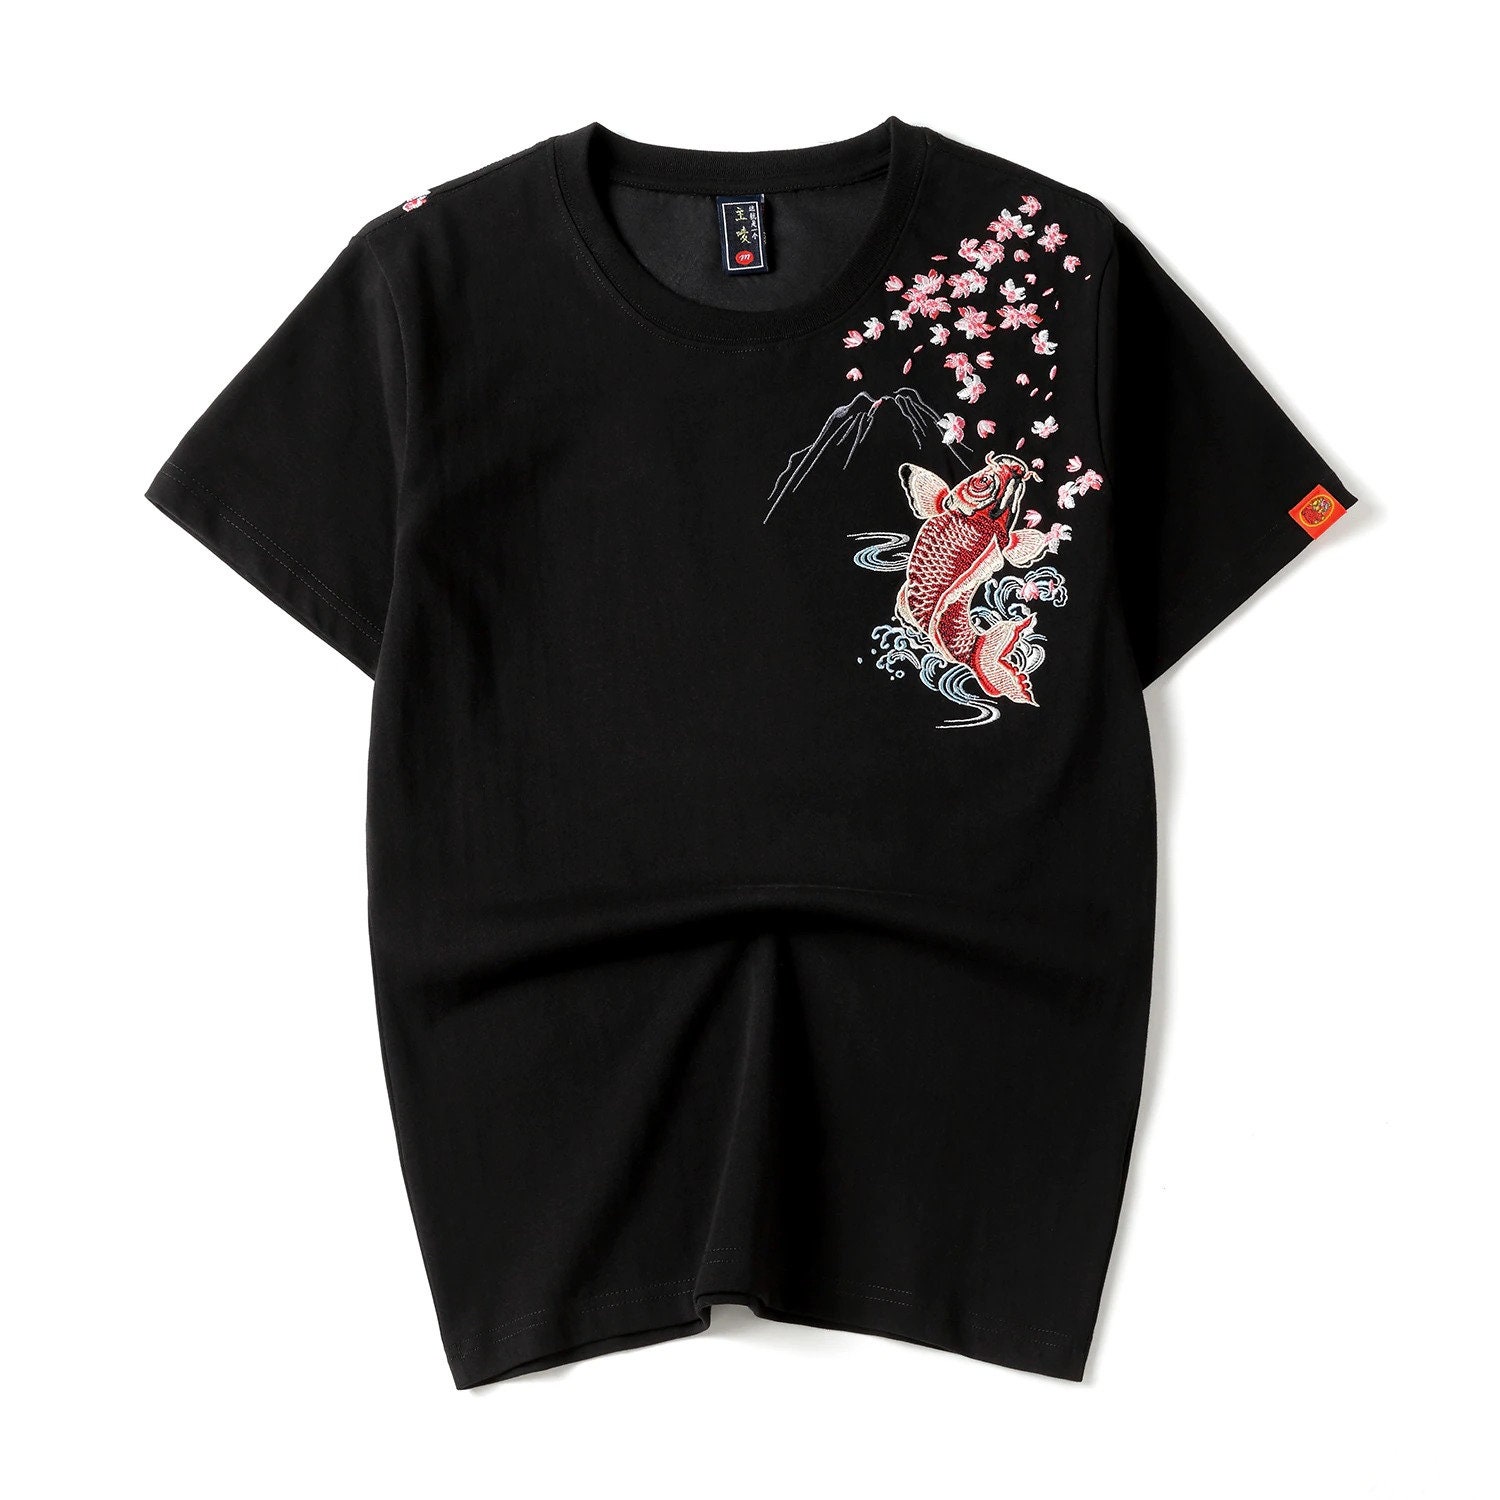 Streetwear Japanese Harajuku Tshirt Short Sleeves Shirt Embroidery Red Fish Urban Fashion Tee Shirt